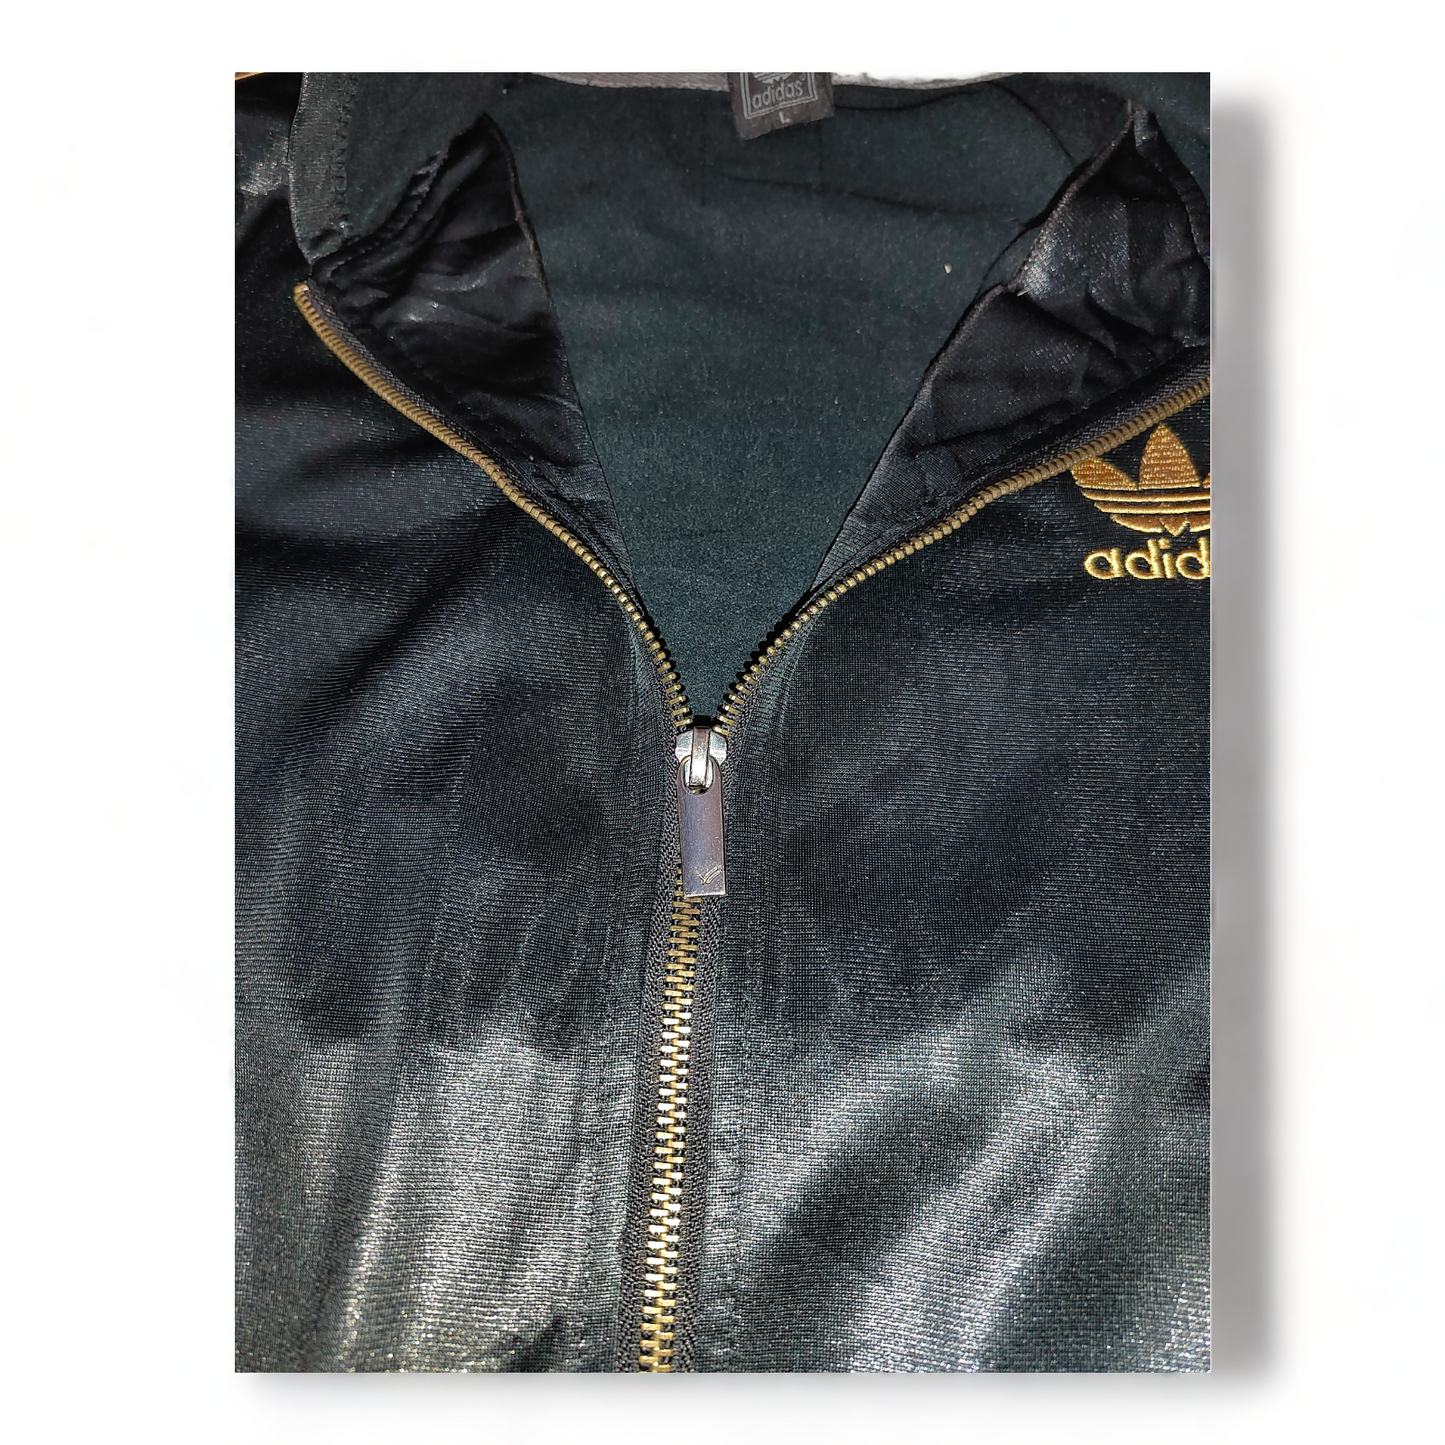 Adidas Jumper Mens XL Black Gold – Vintage 90’s